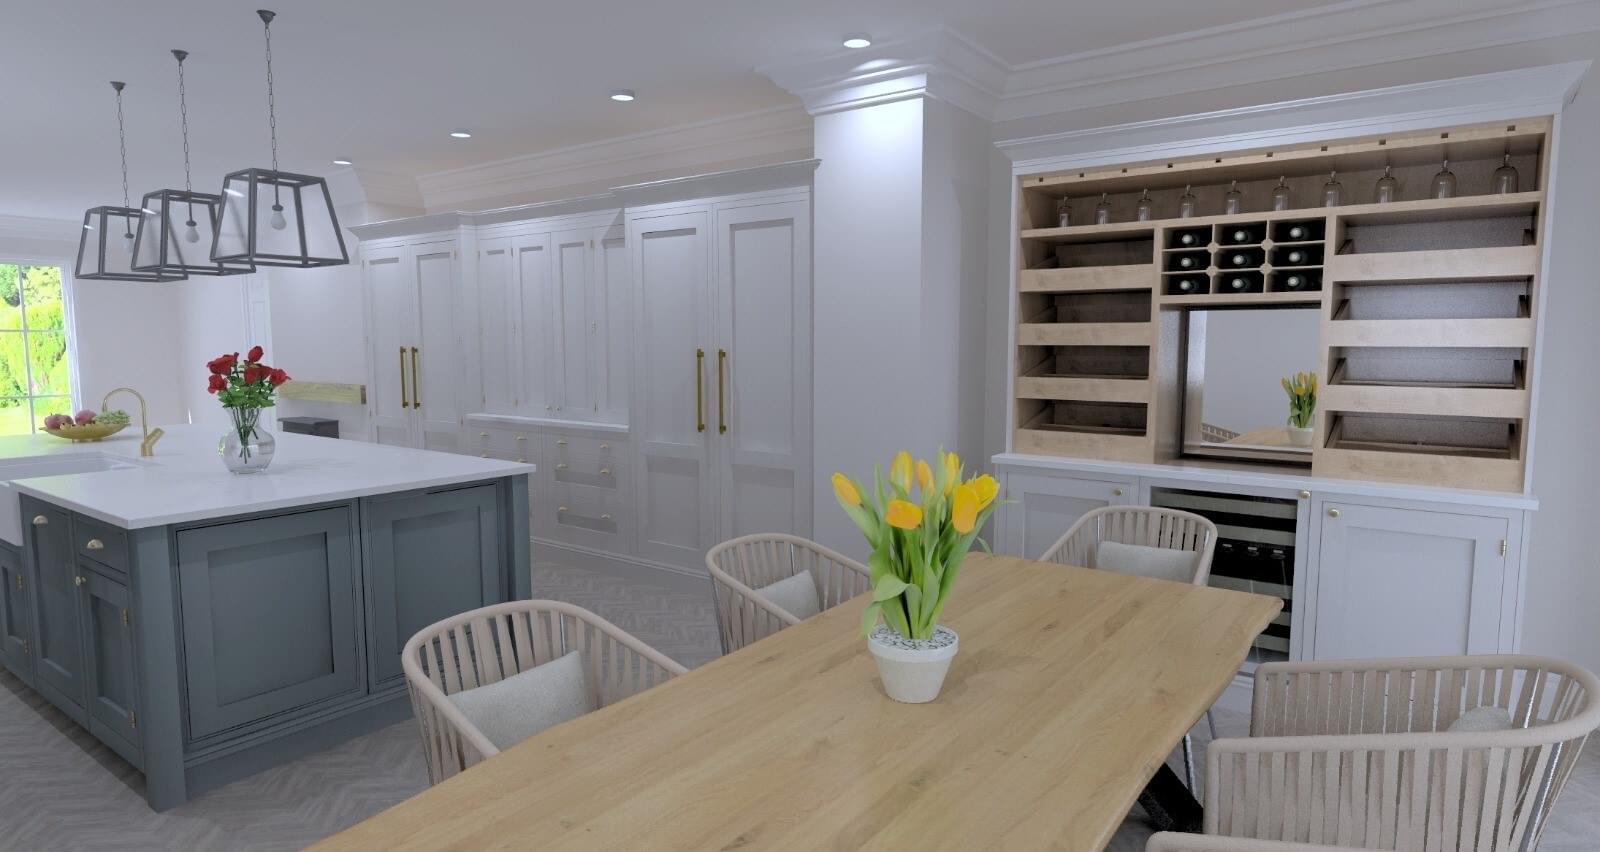 A cgi render of the kitchen design